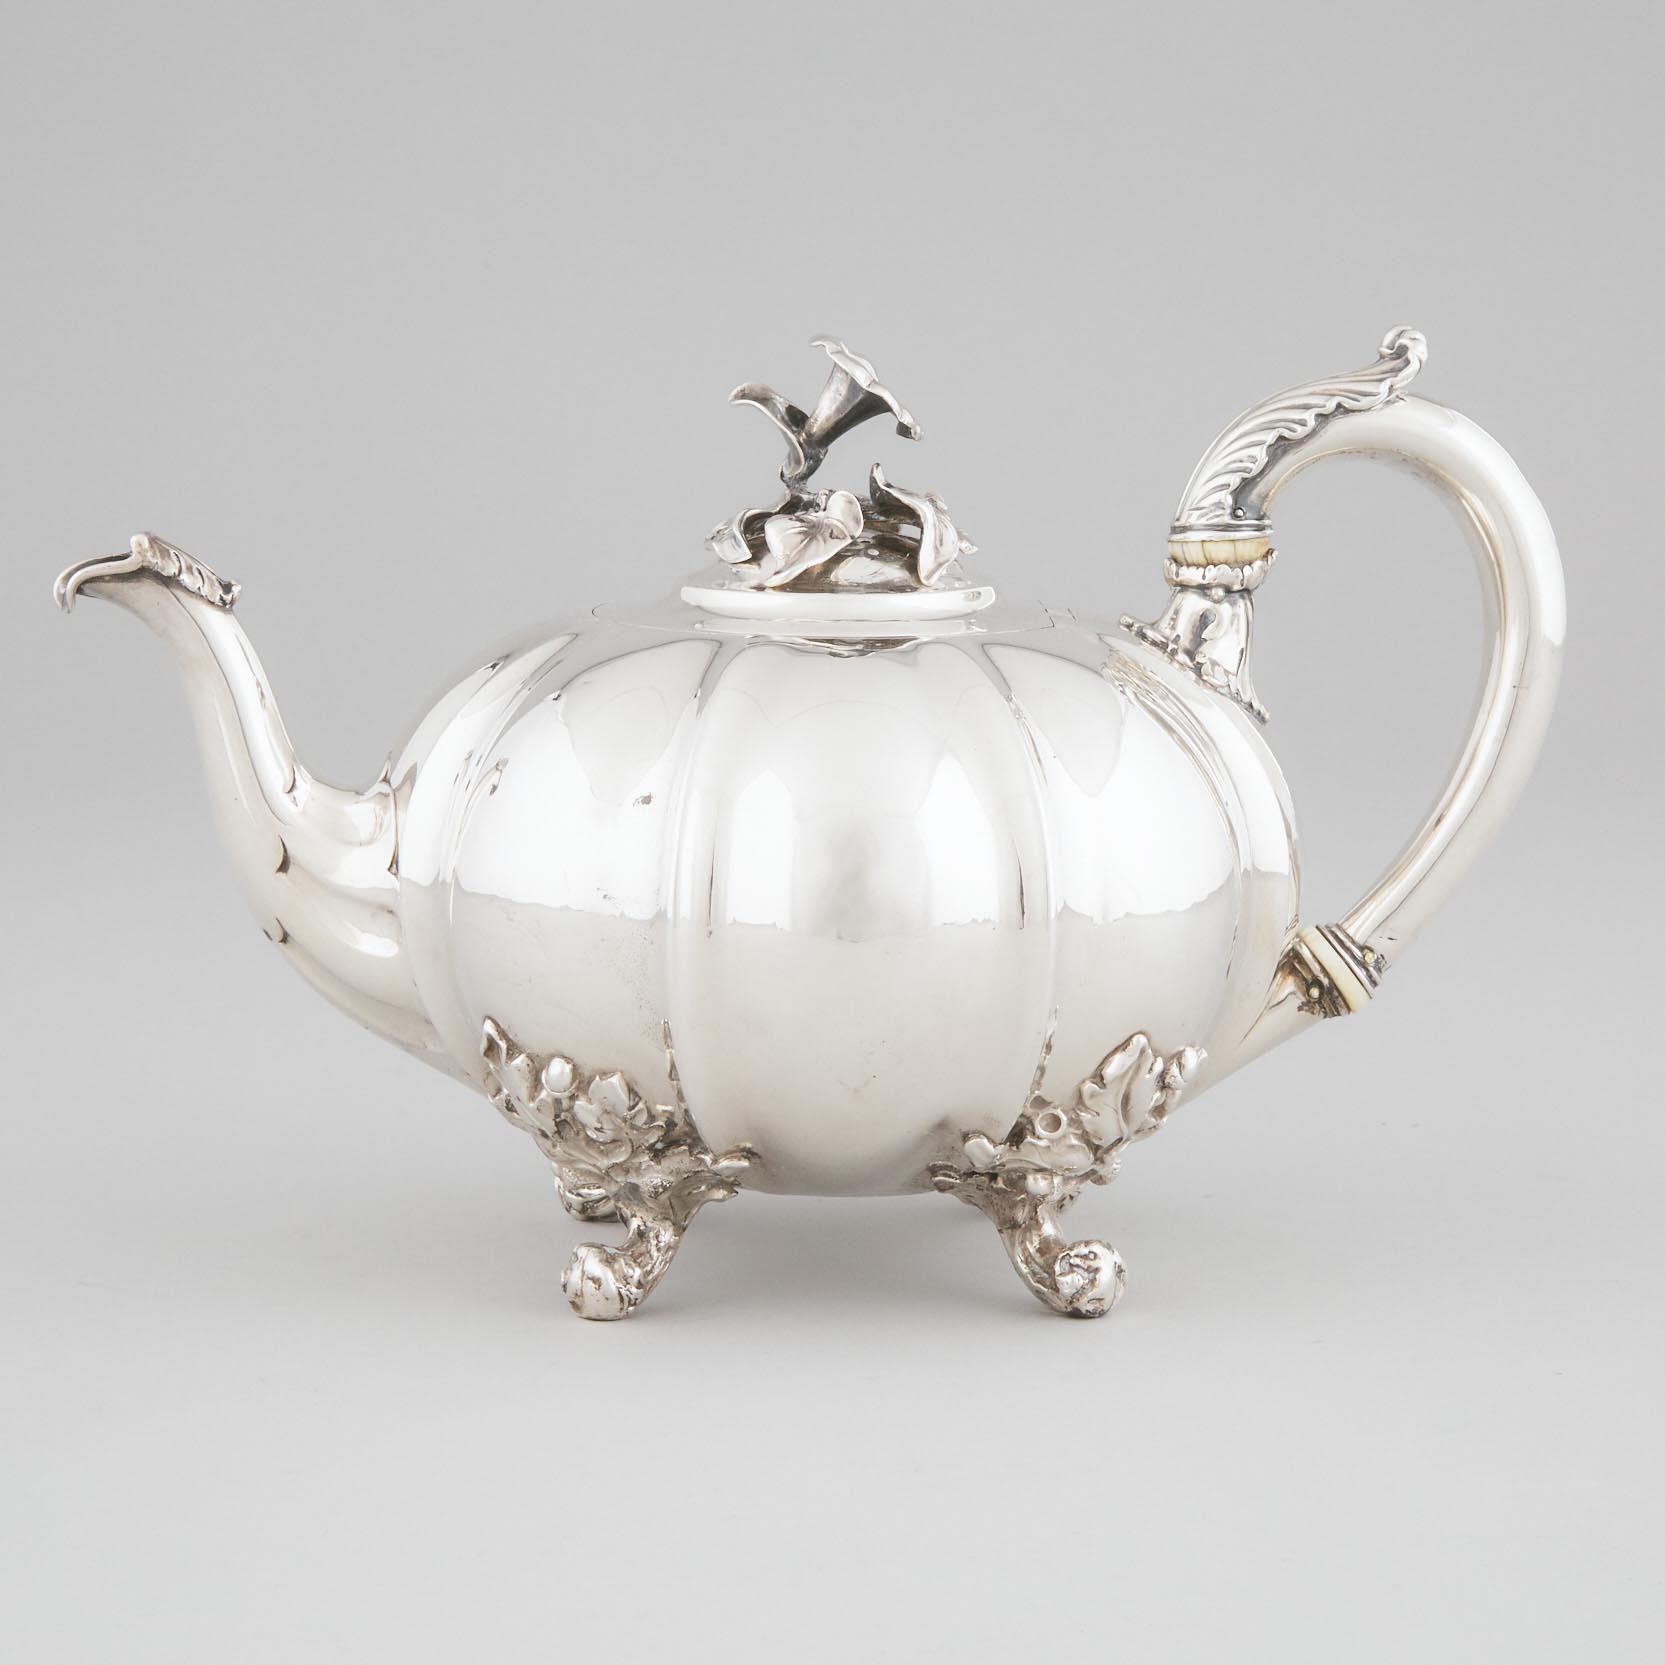 William IV Silver Teapot, Paul Storr, London, 1837